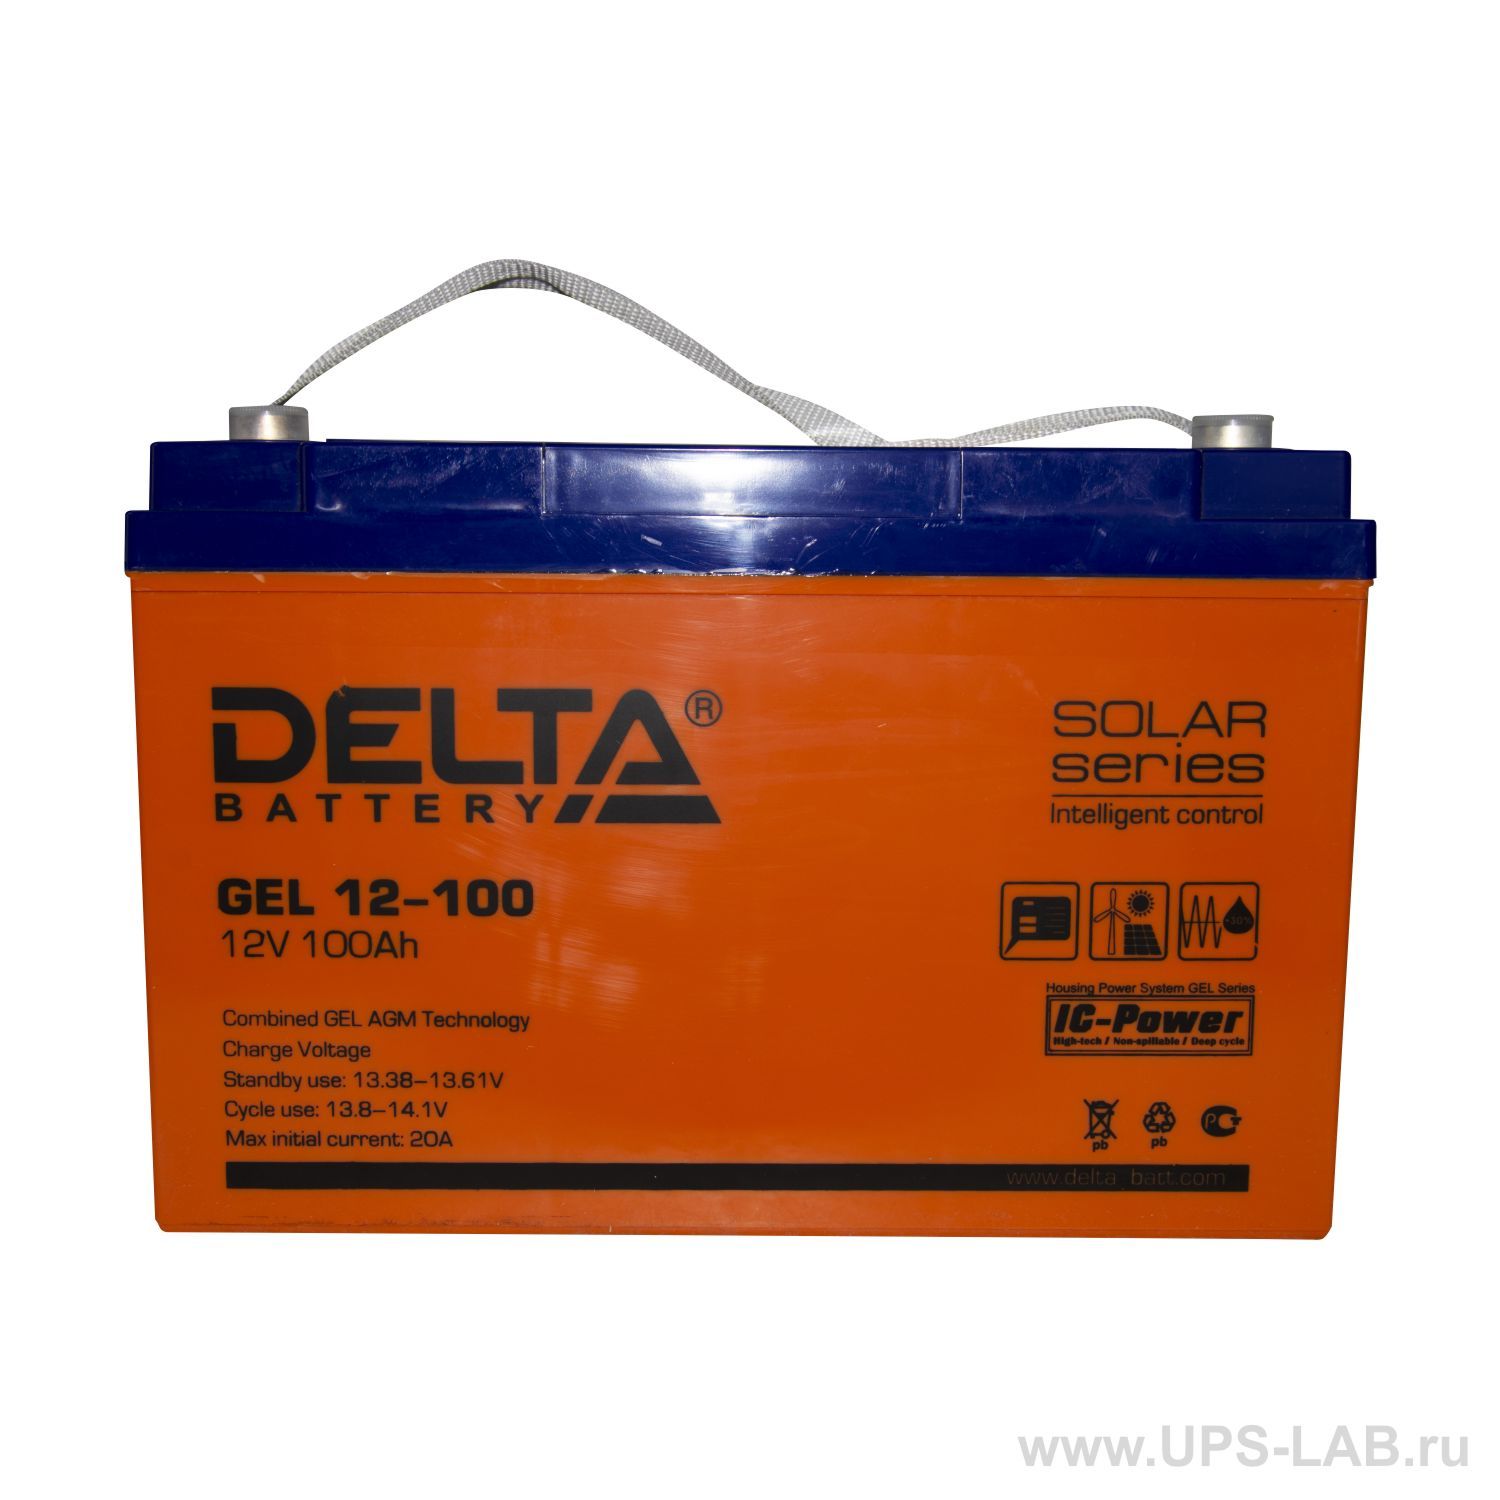 Аккумулятор Delta Gel 12-100. Аккумулятор 100ач Delta. Аккумулятор Delta gel12100 12v 100ah (AGM+Gel, ups/Solar Series) (333*173*222mm). Delta Battery Gel 12-100 12в 100 а·ч. Аккумулятор gel 12в